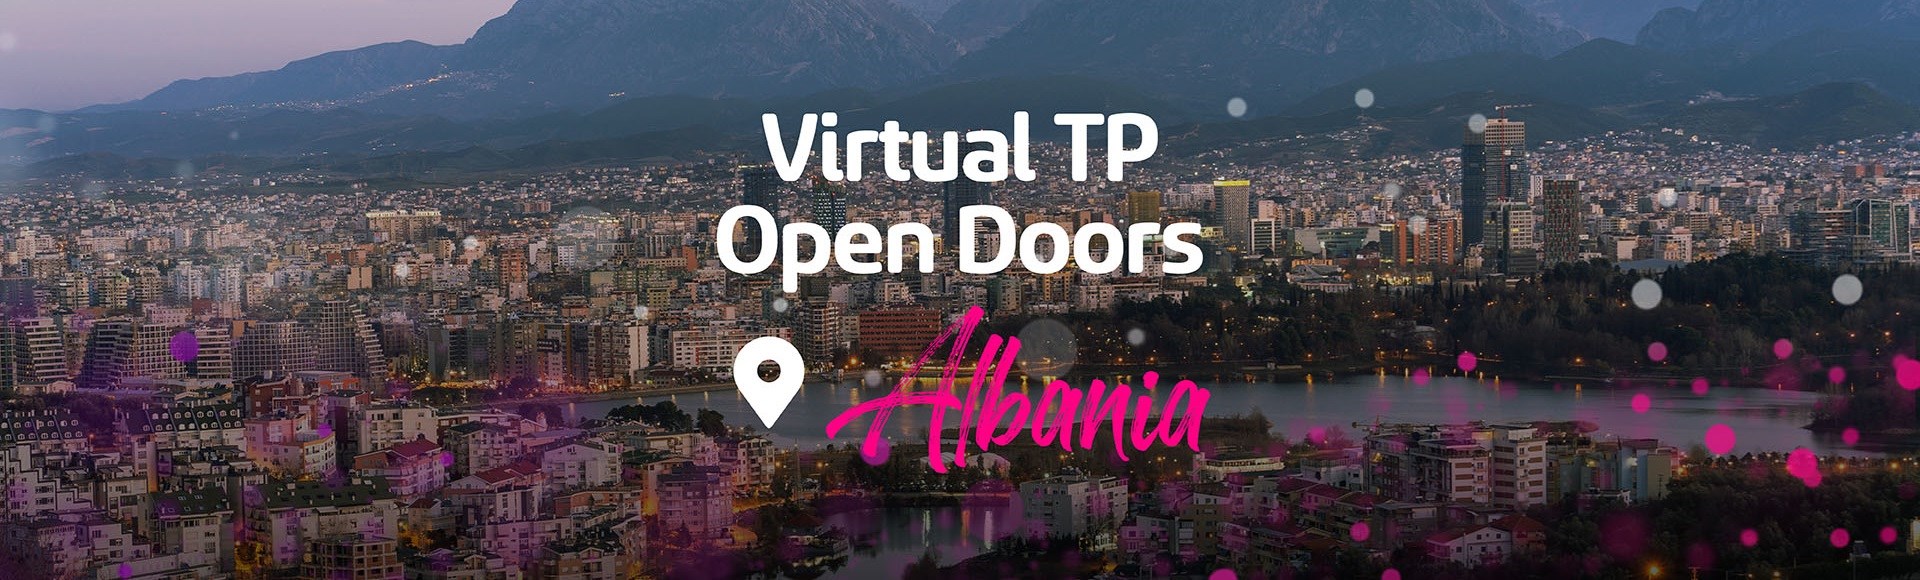 Virtual TP Open Doors: Welcome to Albania